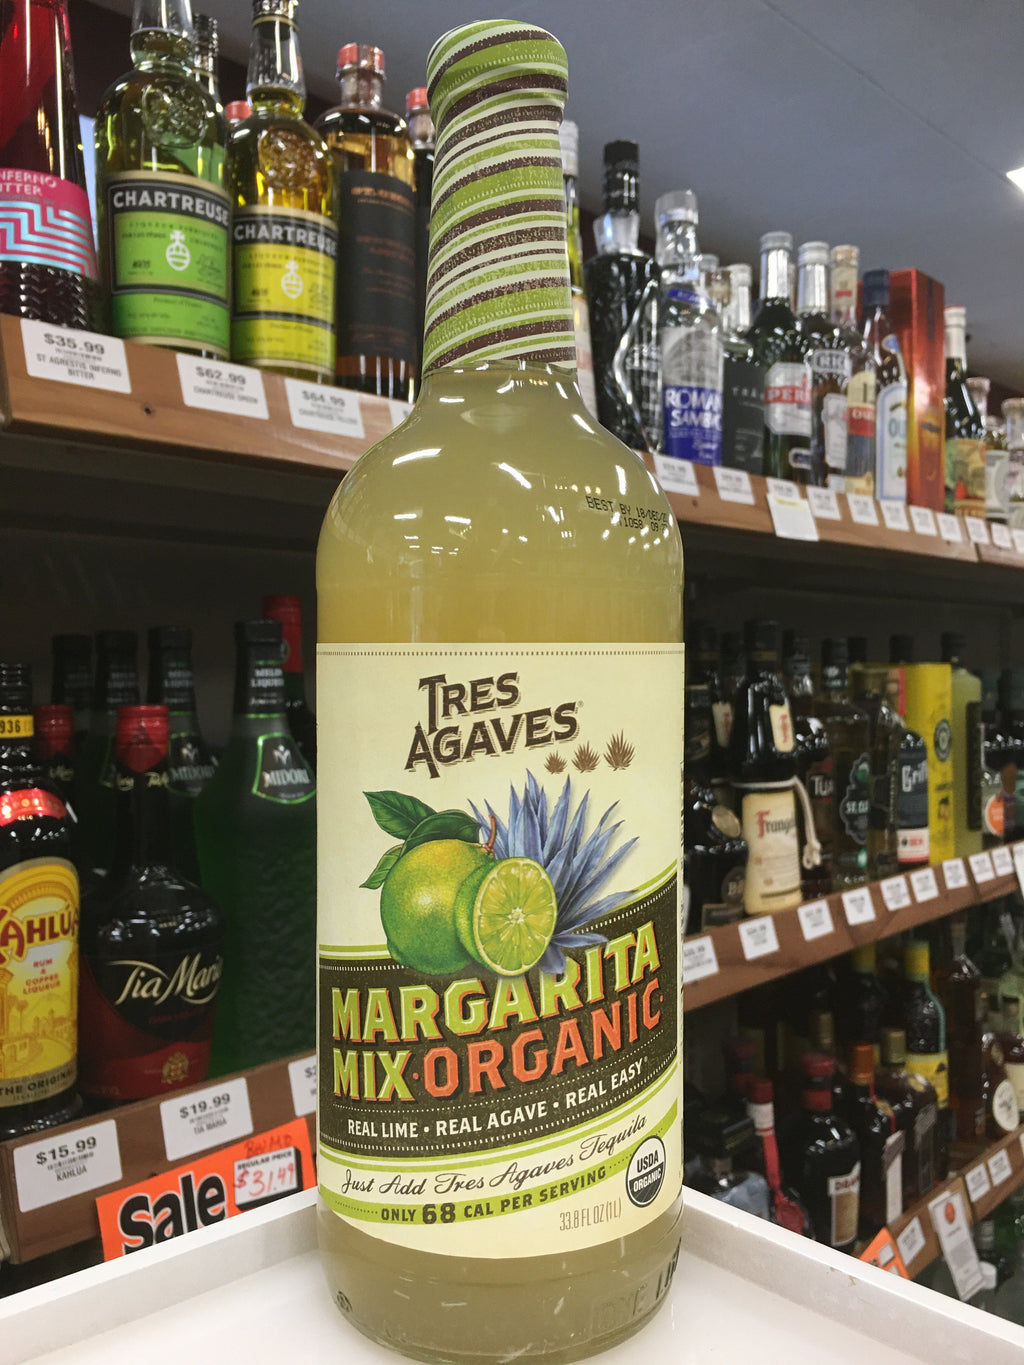 mixed margarita bottle